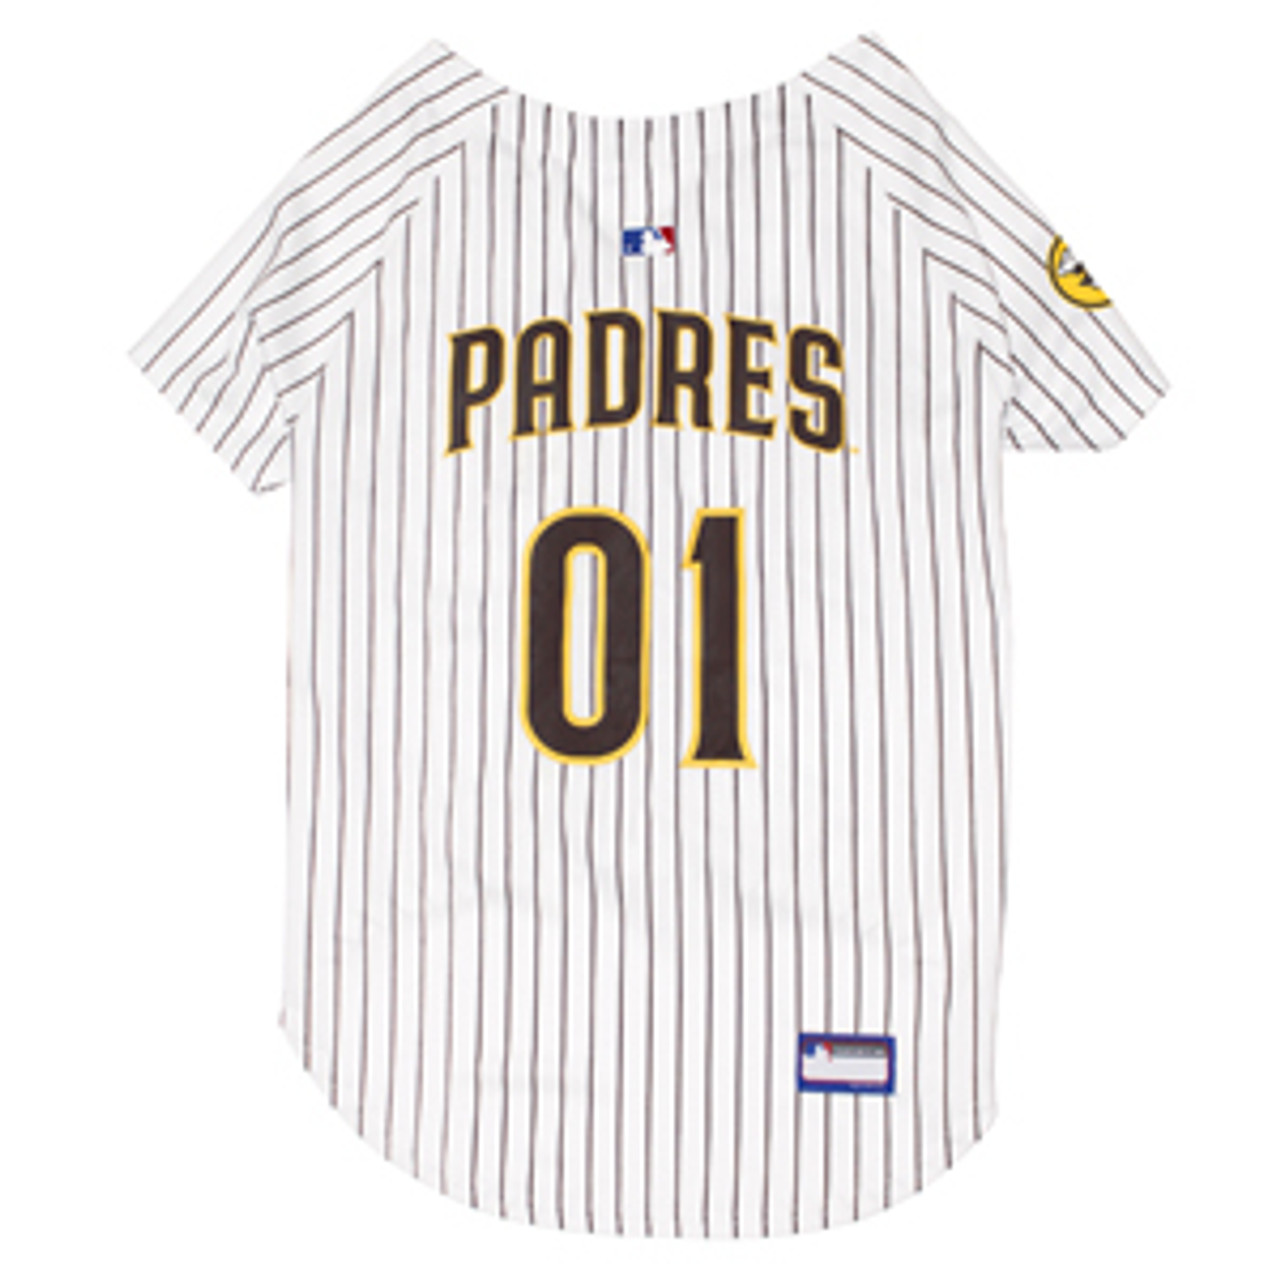 San Diego Padres Merchandise, Jerseys, Apparel, Clothing